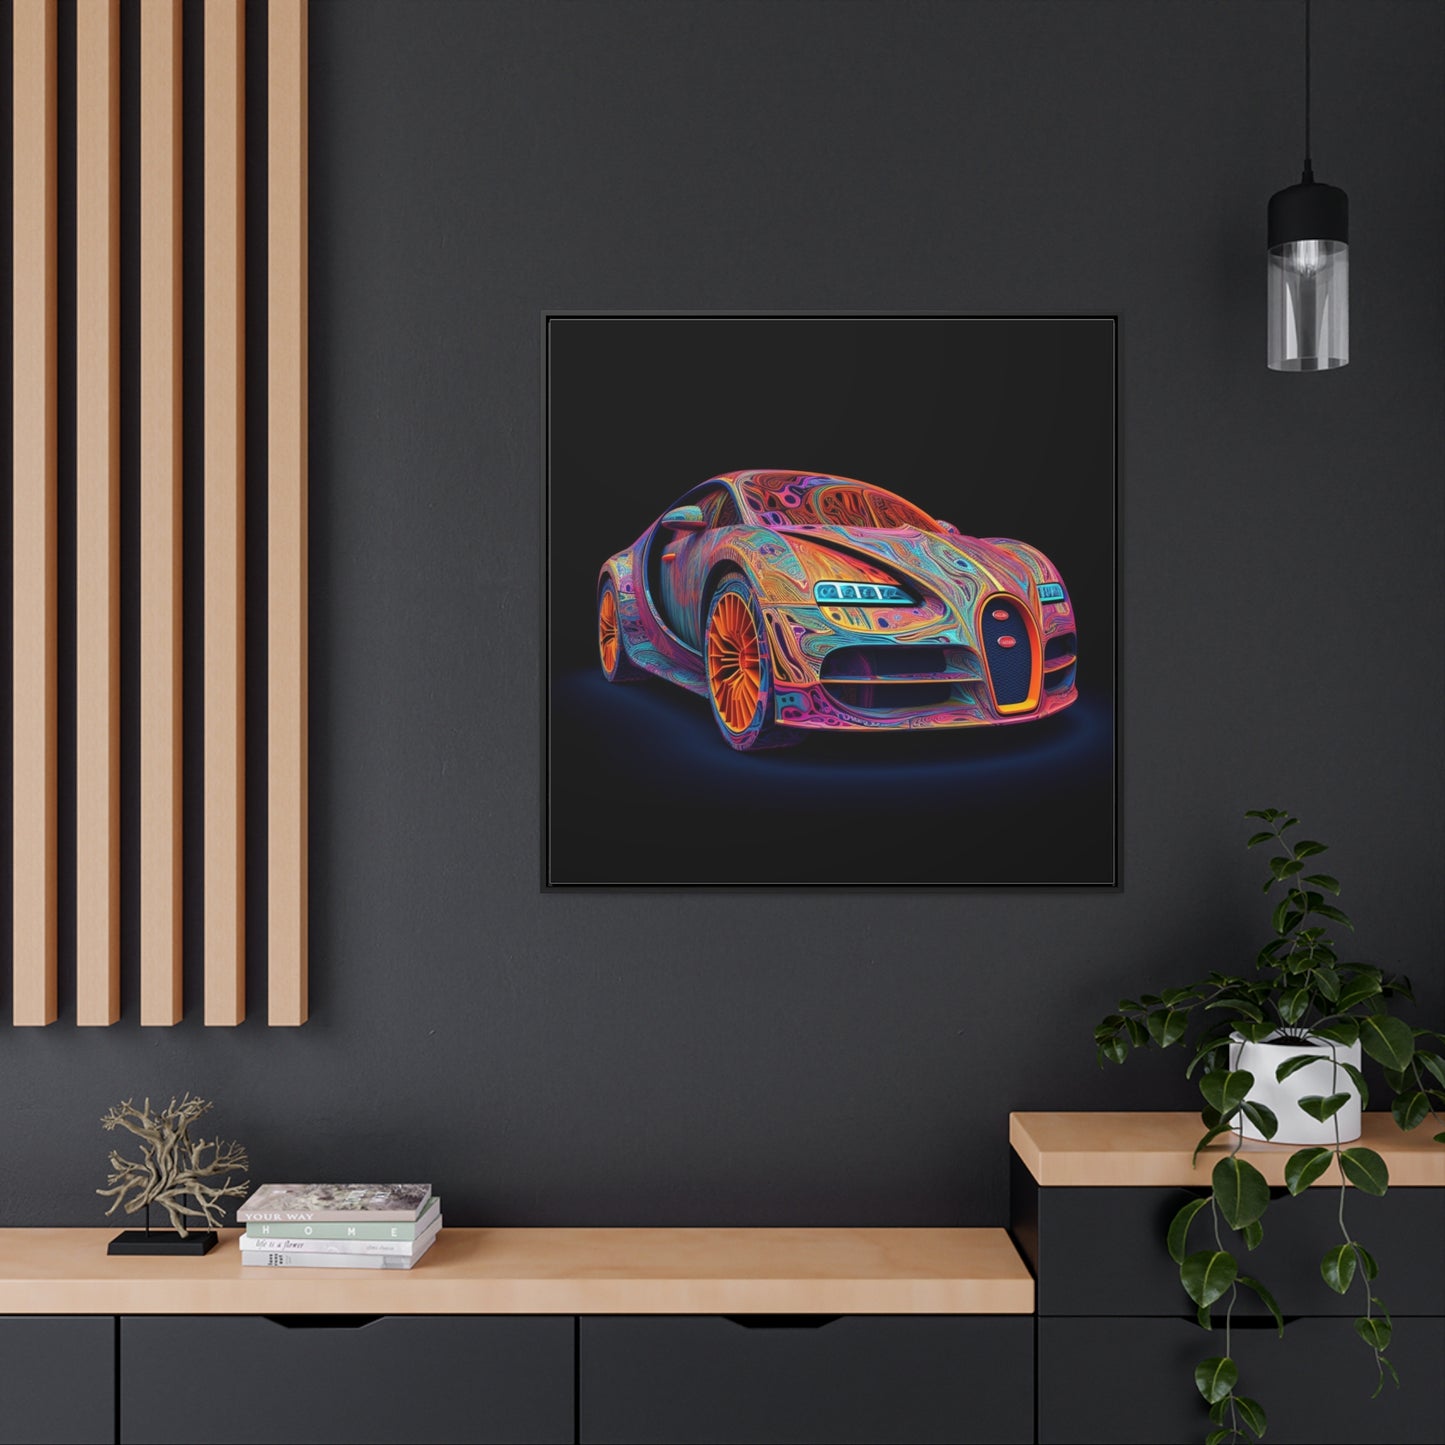 Gallery Canvas Wraps, Square Frame Bugatti Abstract Concept 1